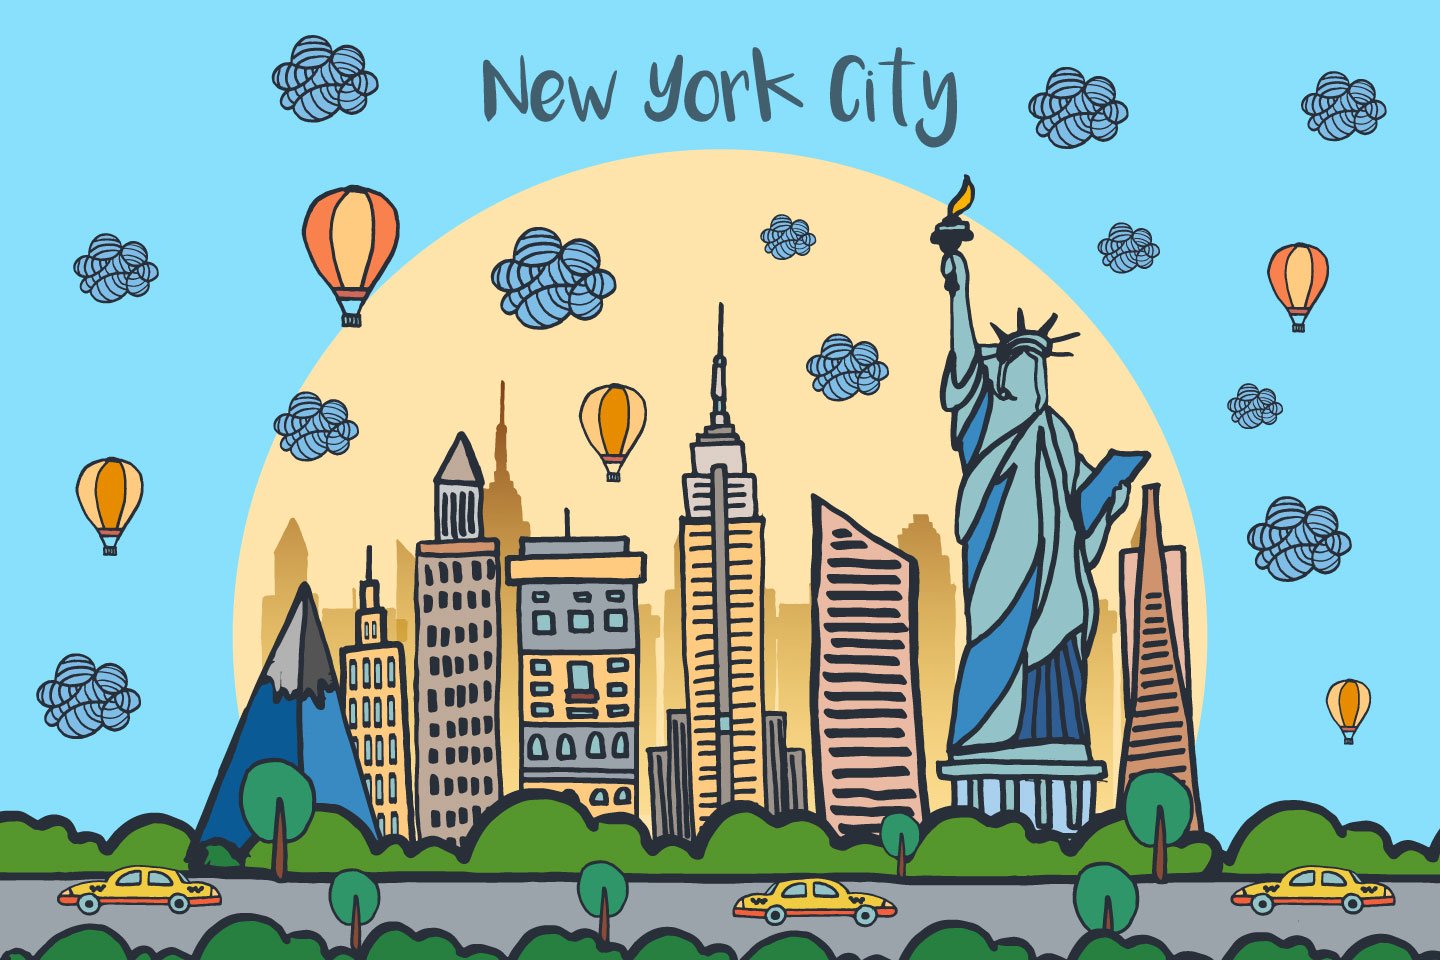 New York City Vector Free Illustration - GraphicSurf.com.